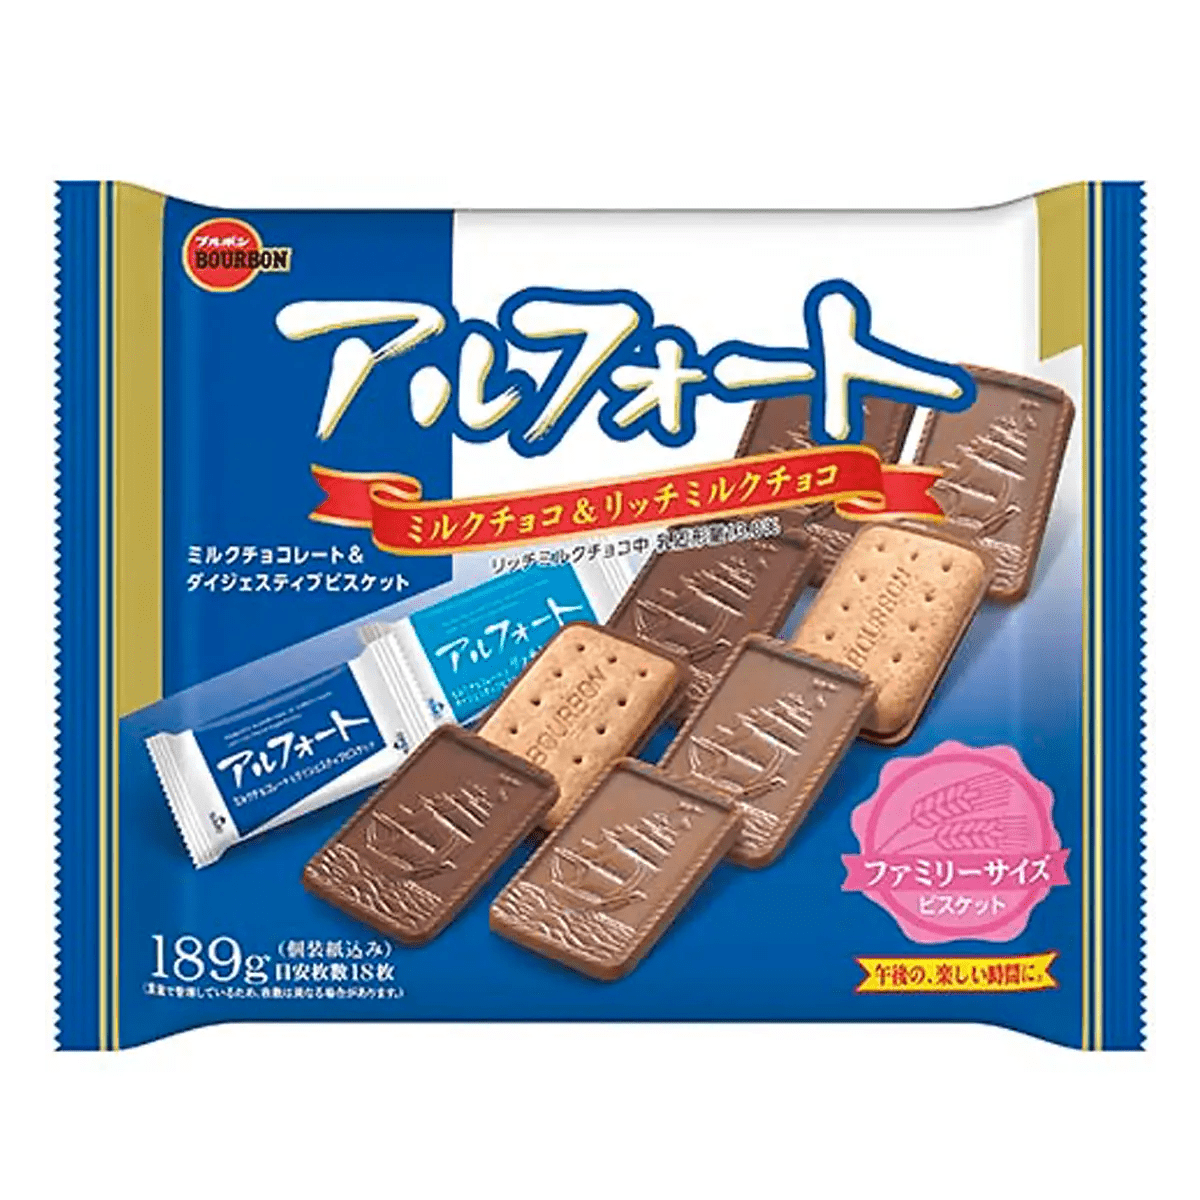 BOURBON Alfort "Milk Chocolate Cookies" Family Size - Rosey’s Kawaii Shop